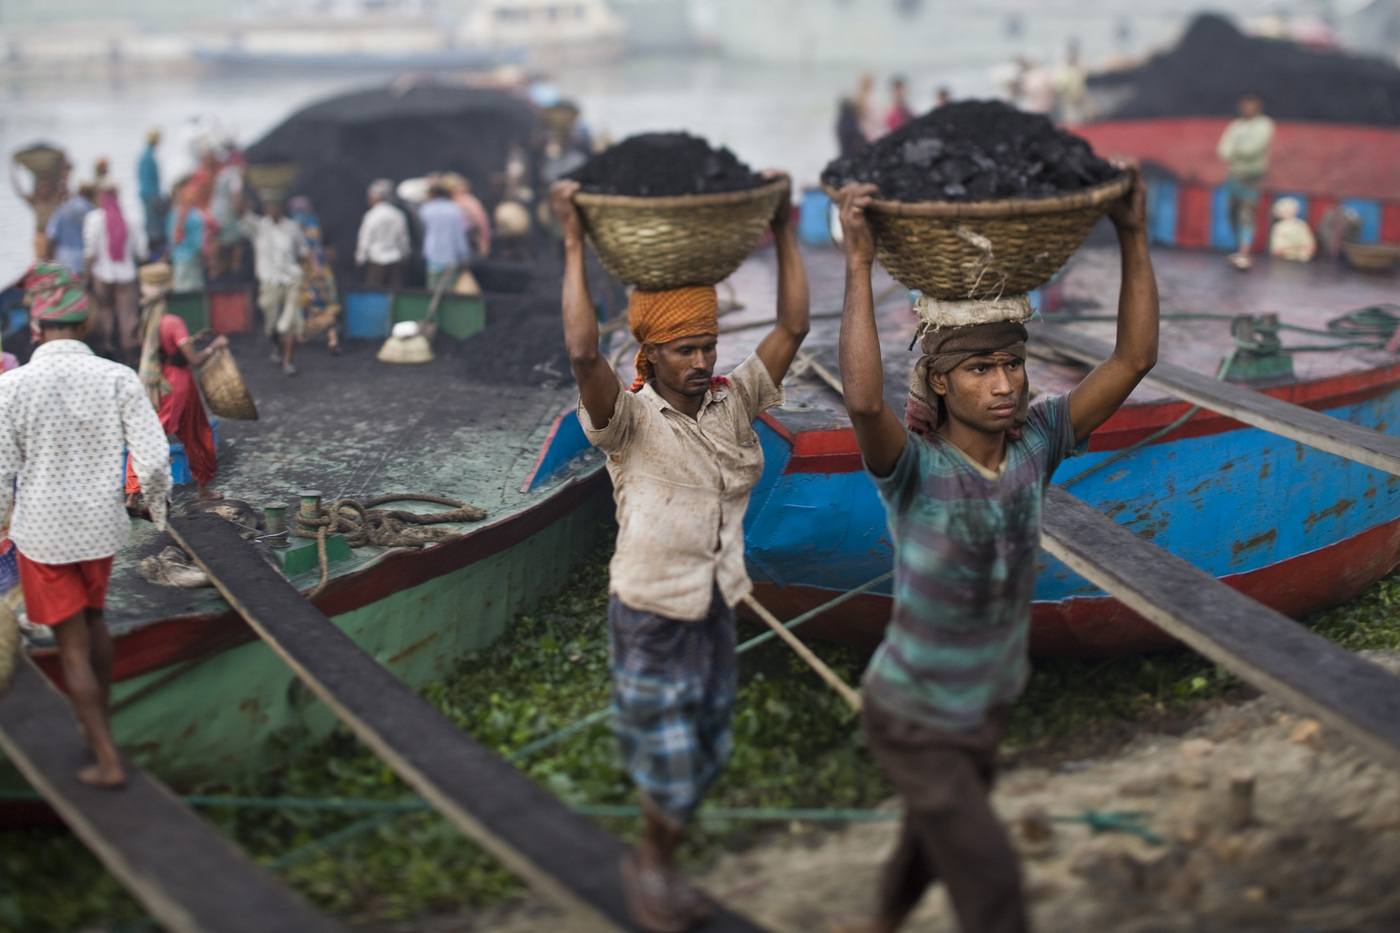 Unloading the barges, Bangladesh : Encounters : David Burnett | Photographer